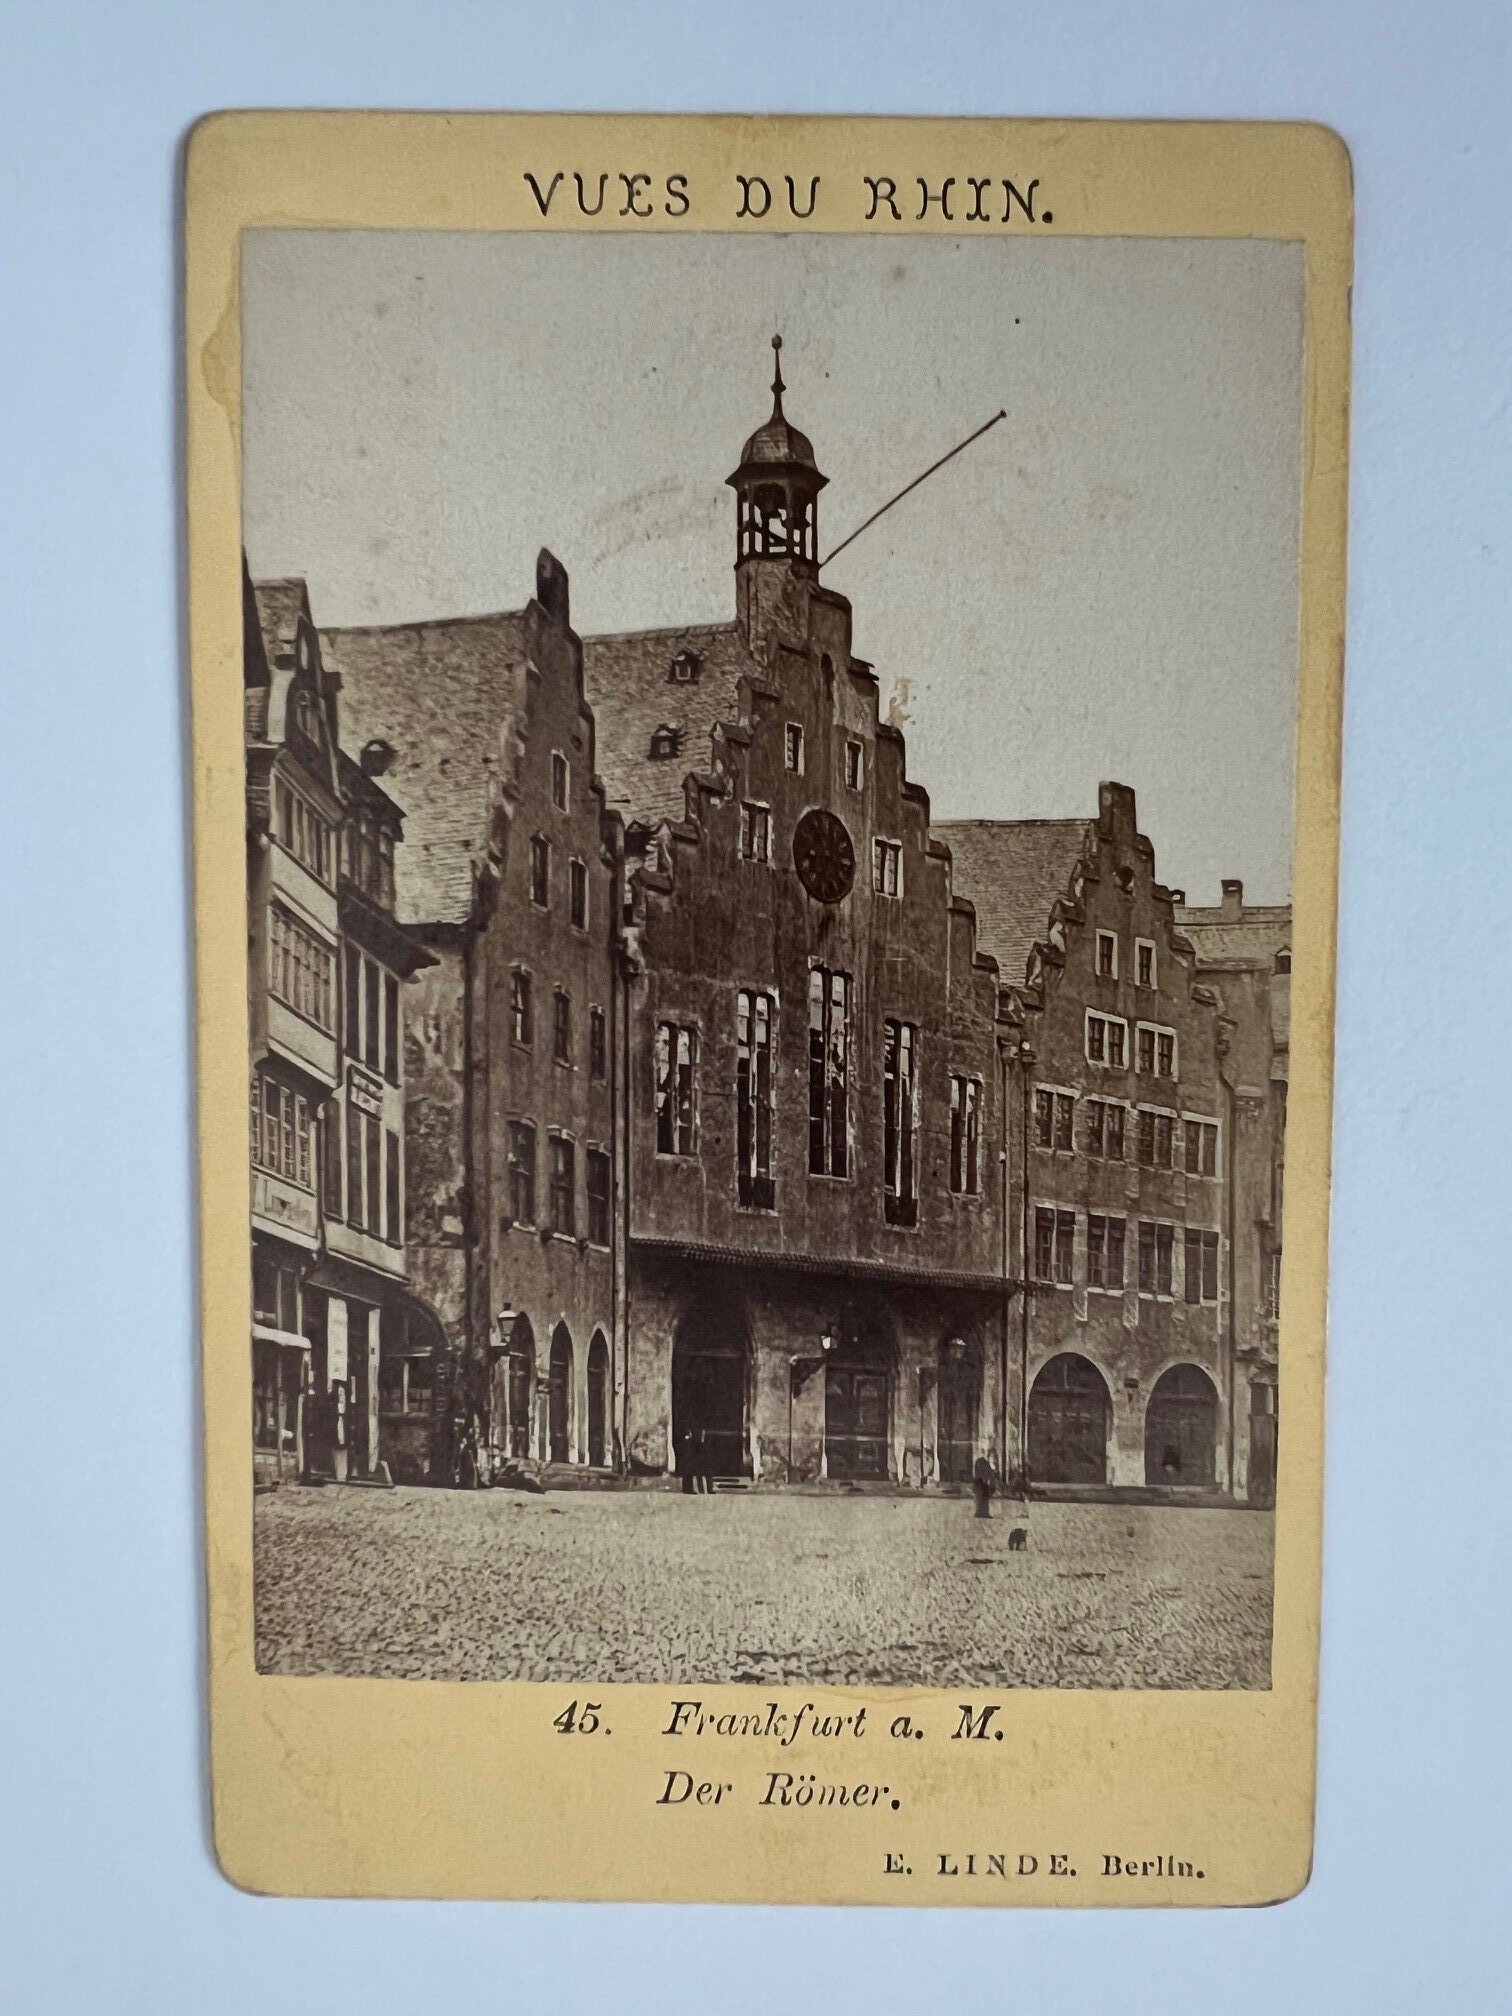 CdV, E. Linde, Frankfurt, Nr. 45, Der Römer, ca. 1874. (Taunus-Rhein-Main - Regionalgeschichtliche Sammlung Dr. Stefan Naas CC BY-NC-SA)